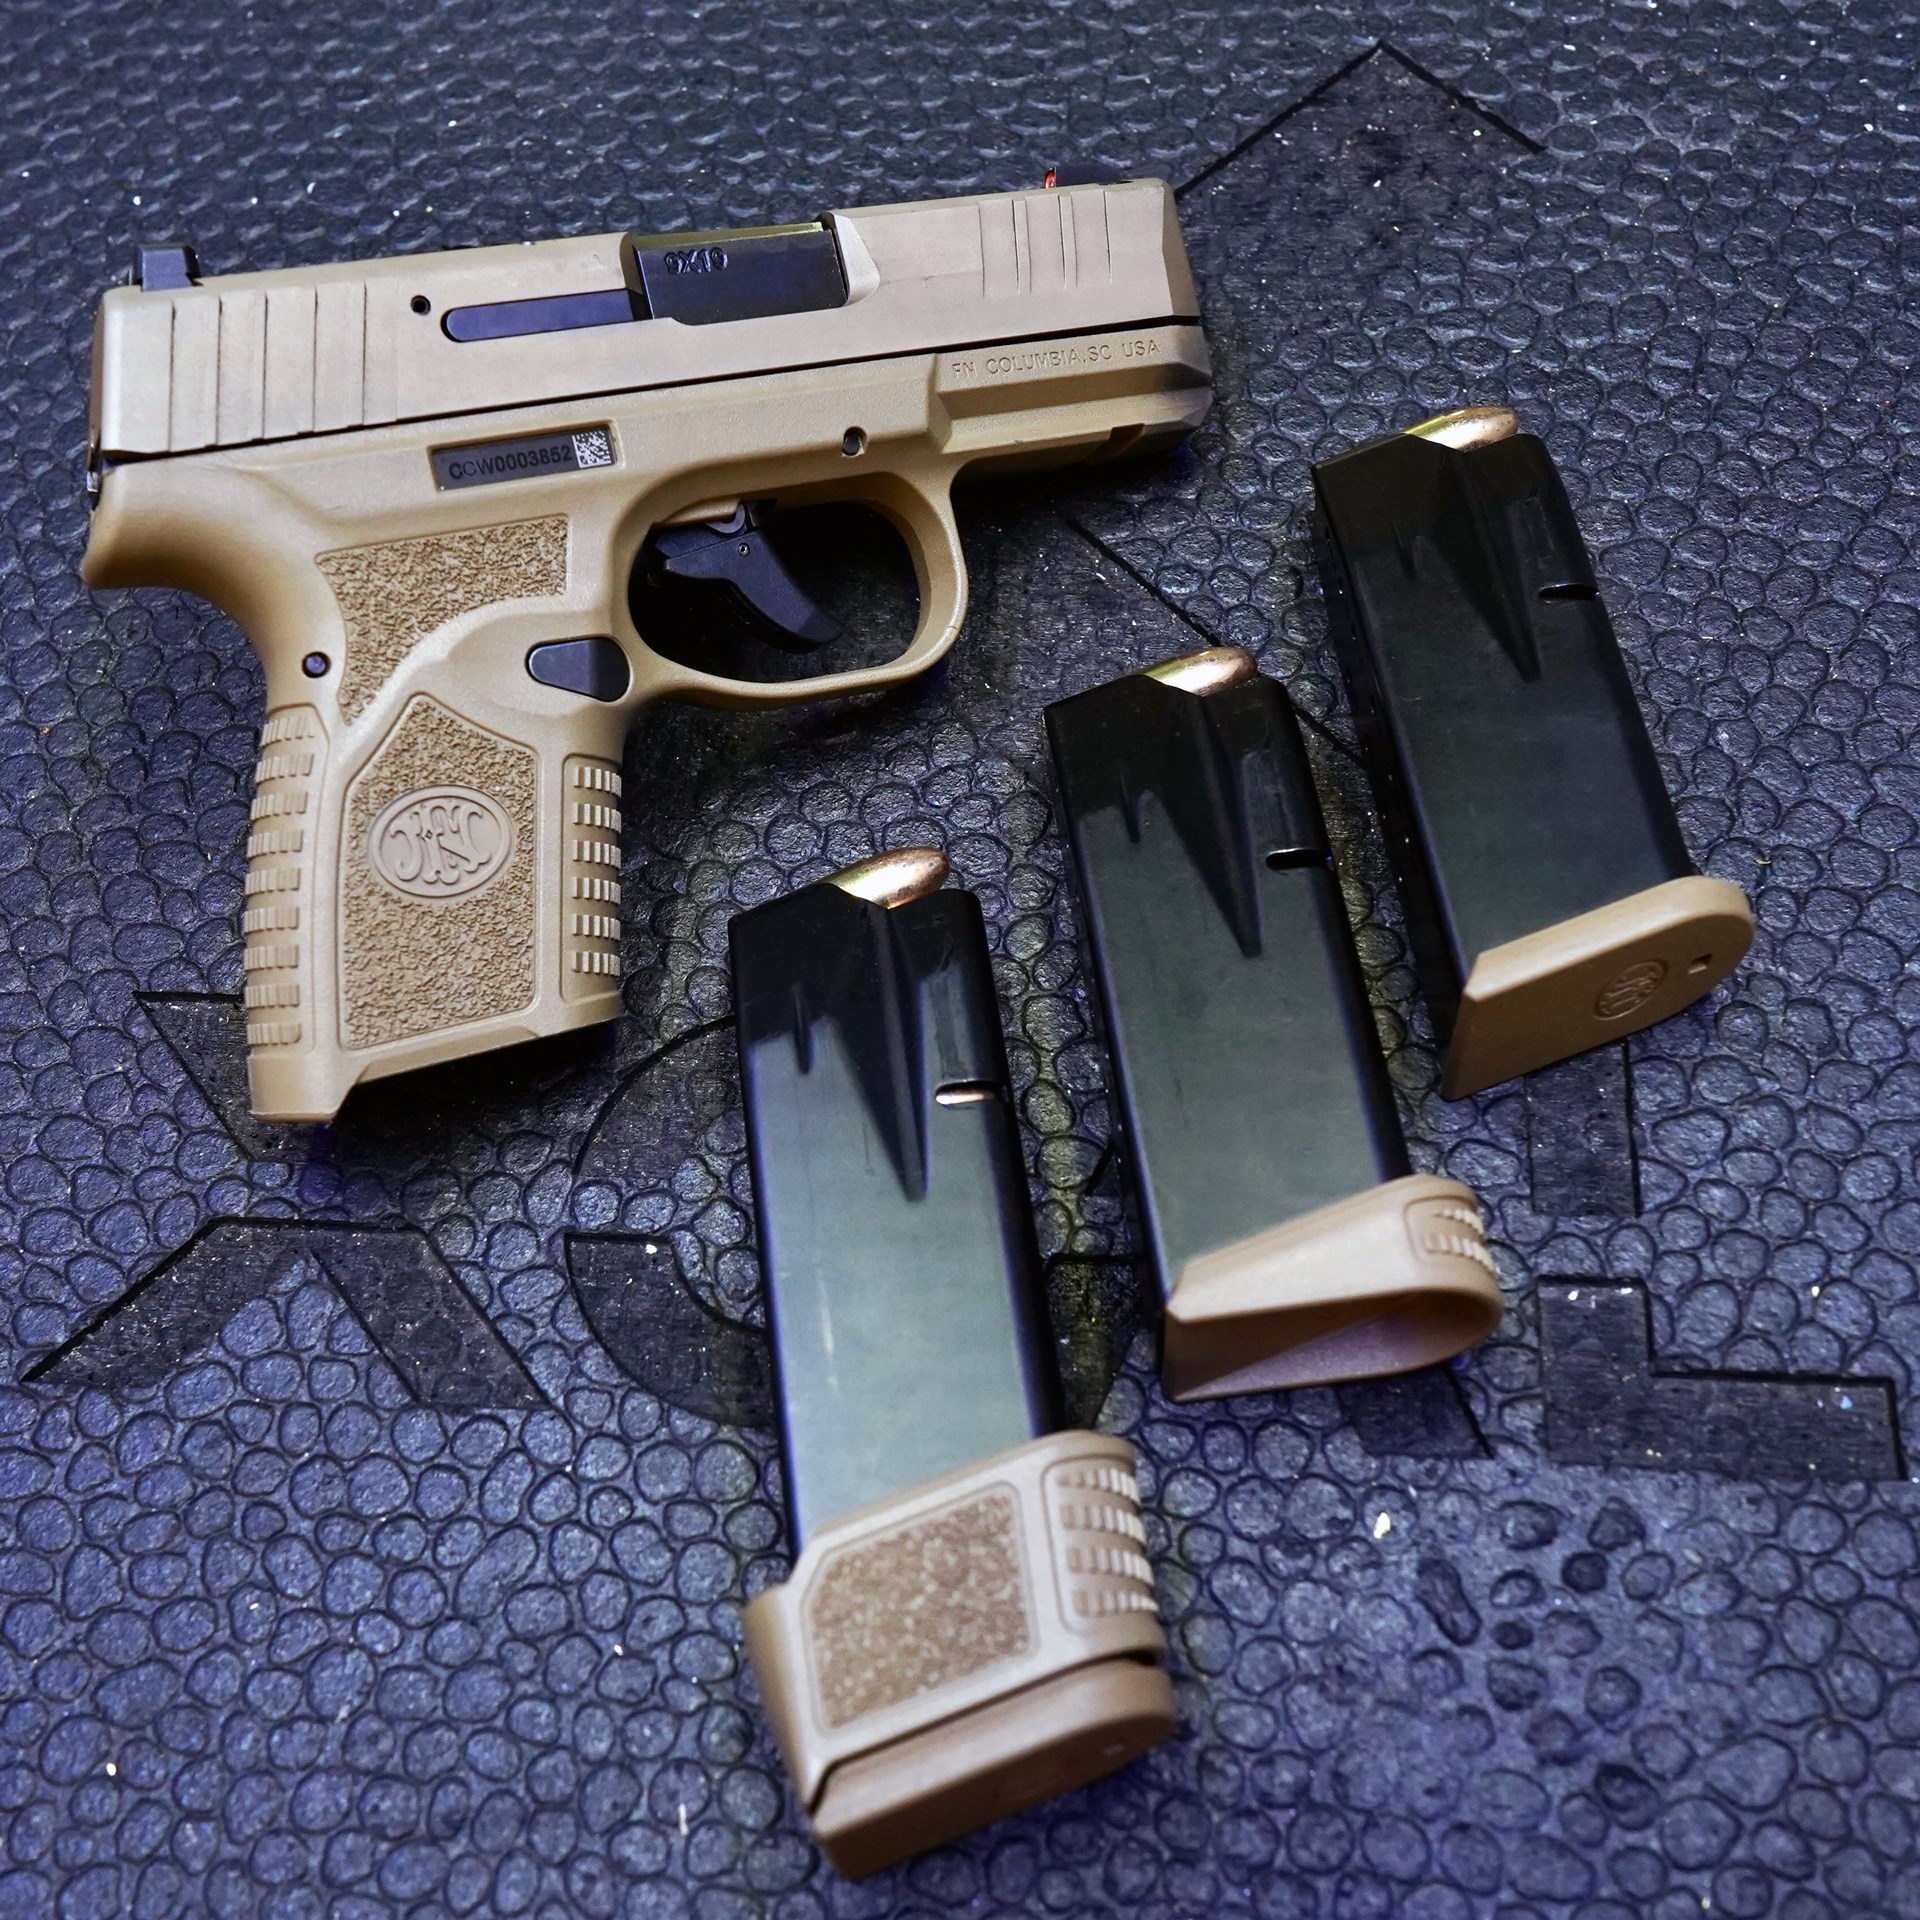 FN America Reflex pistol handgun micro-compact 9 mm three magazines ammunition bullets mags